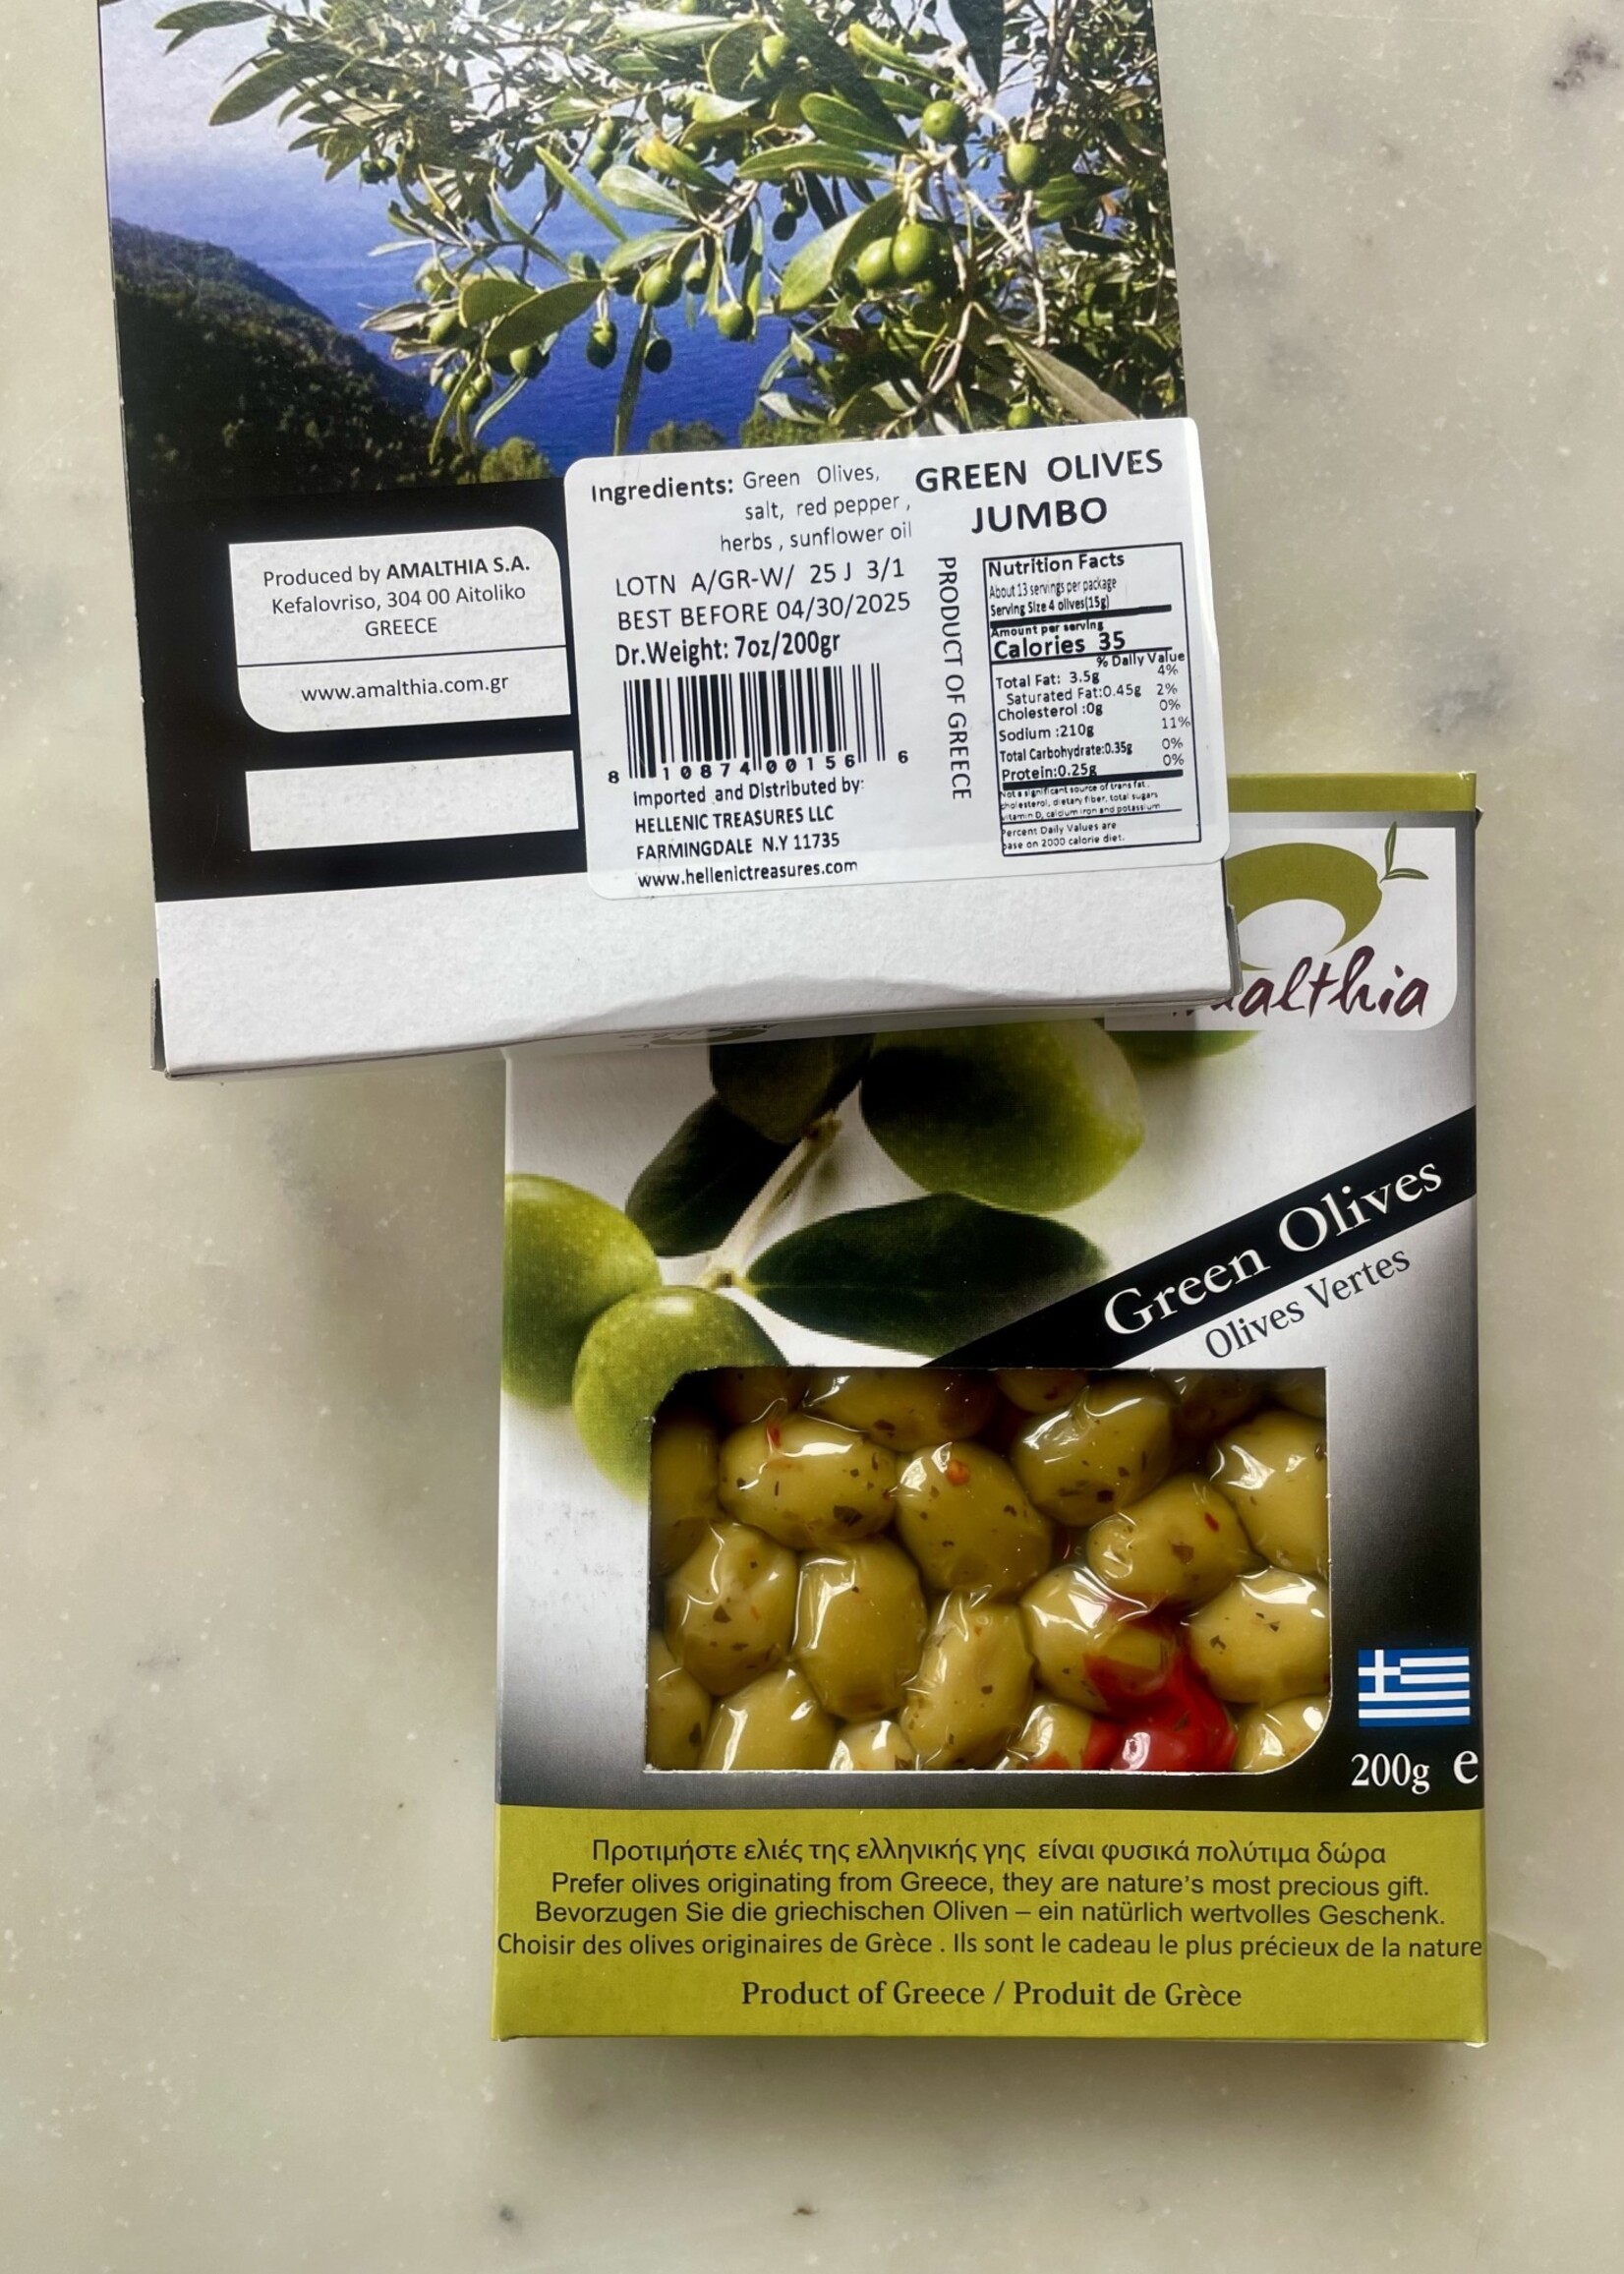 Amalthia Greek Marinated Green Olives 7oz (200g)